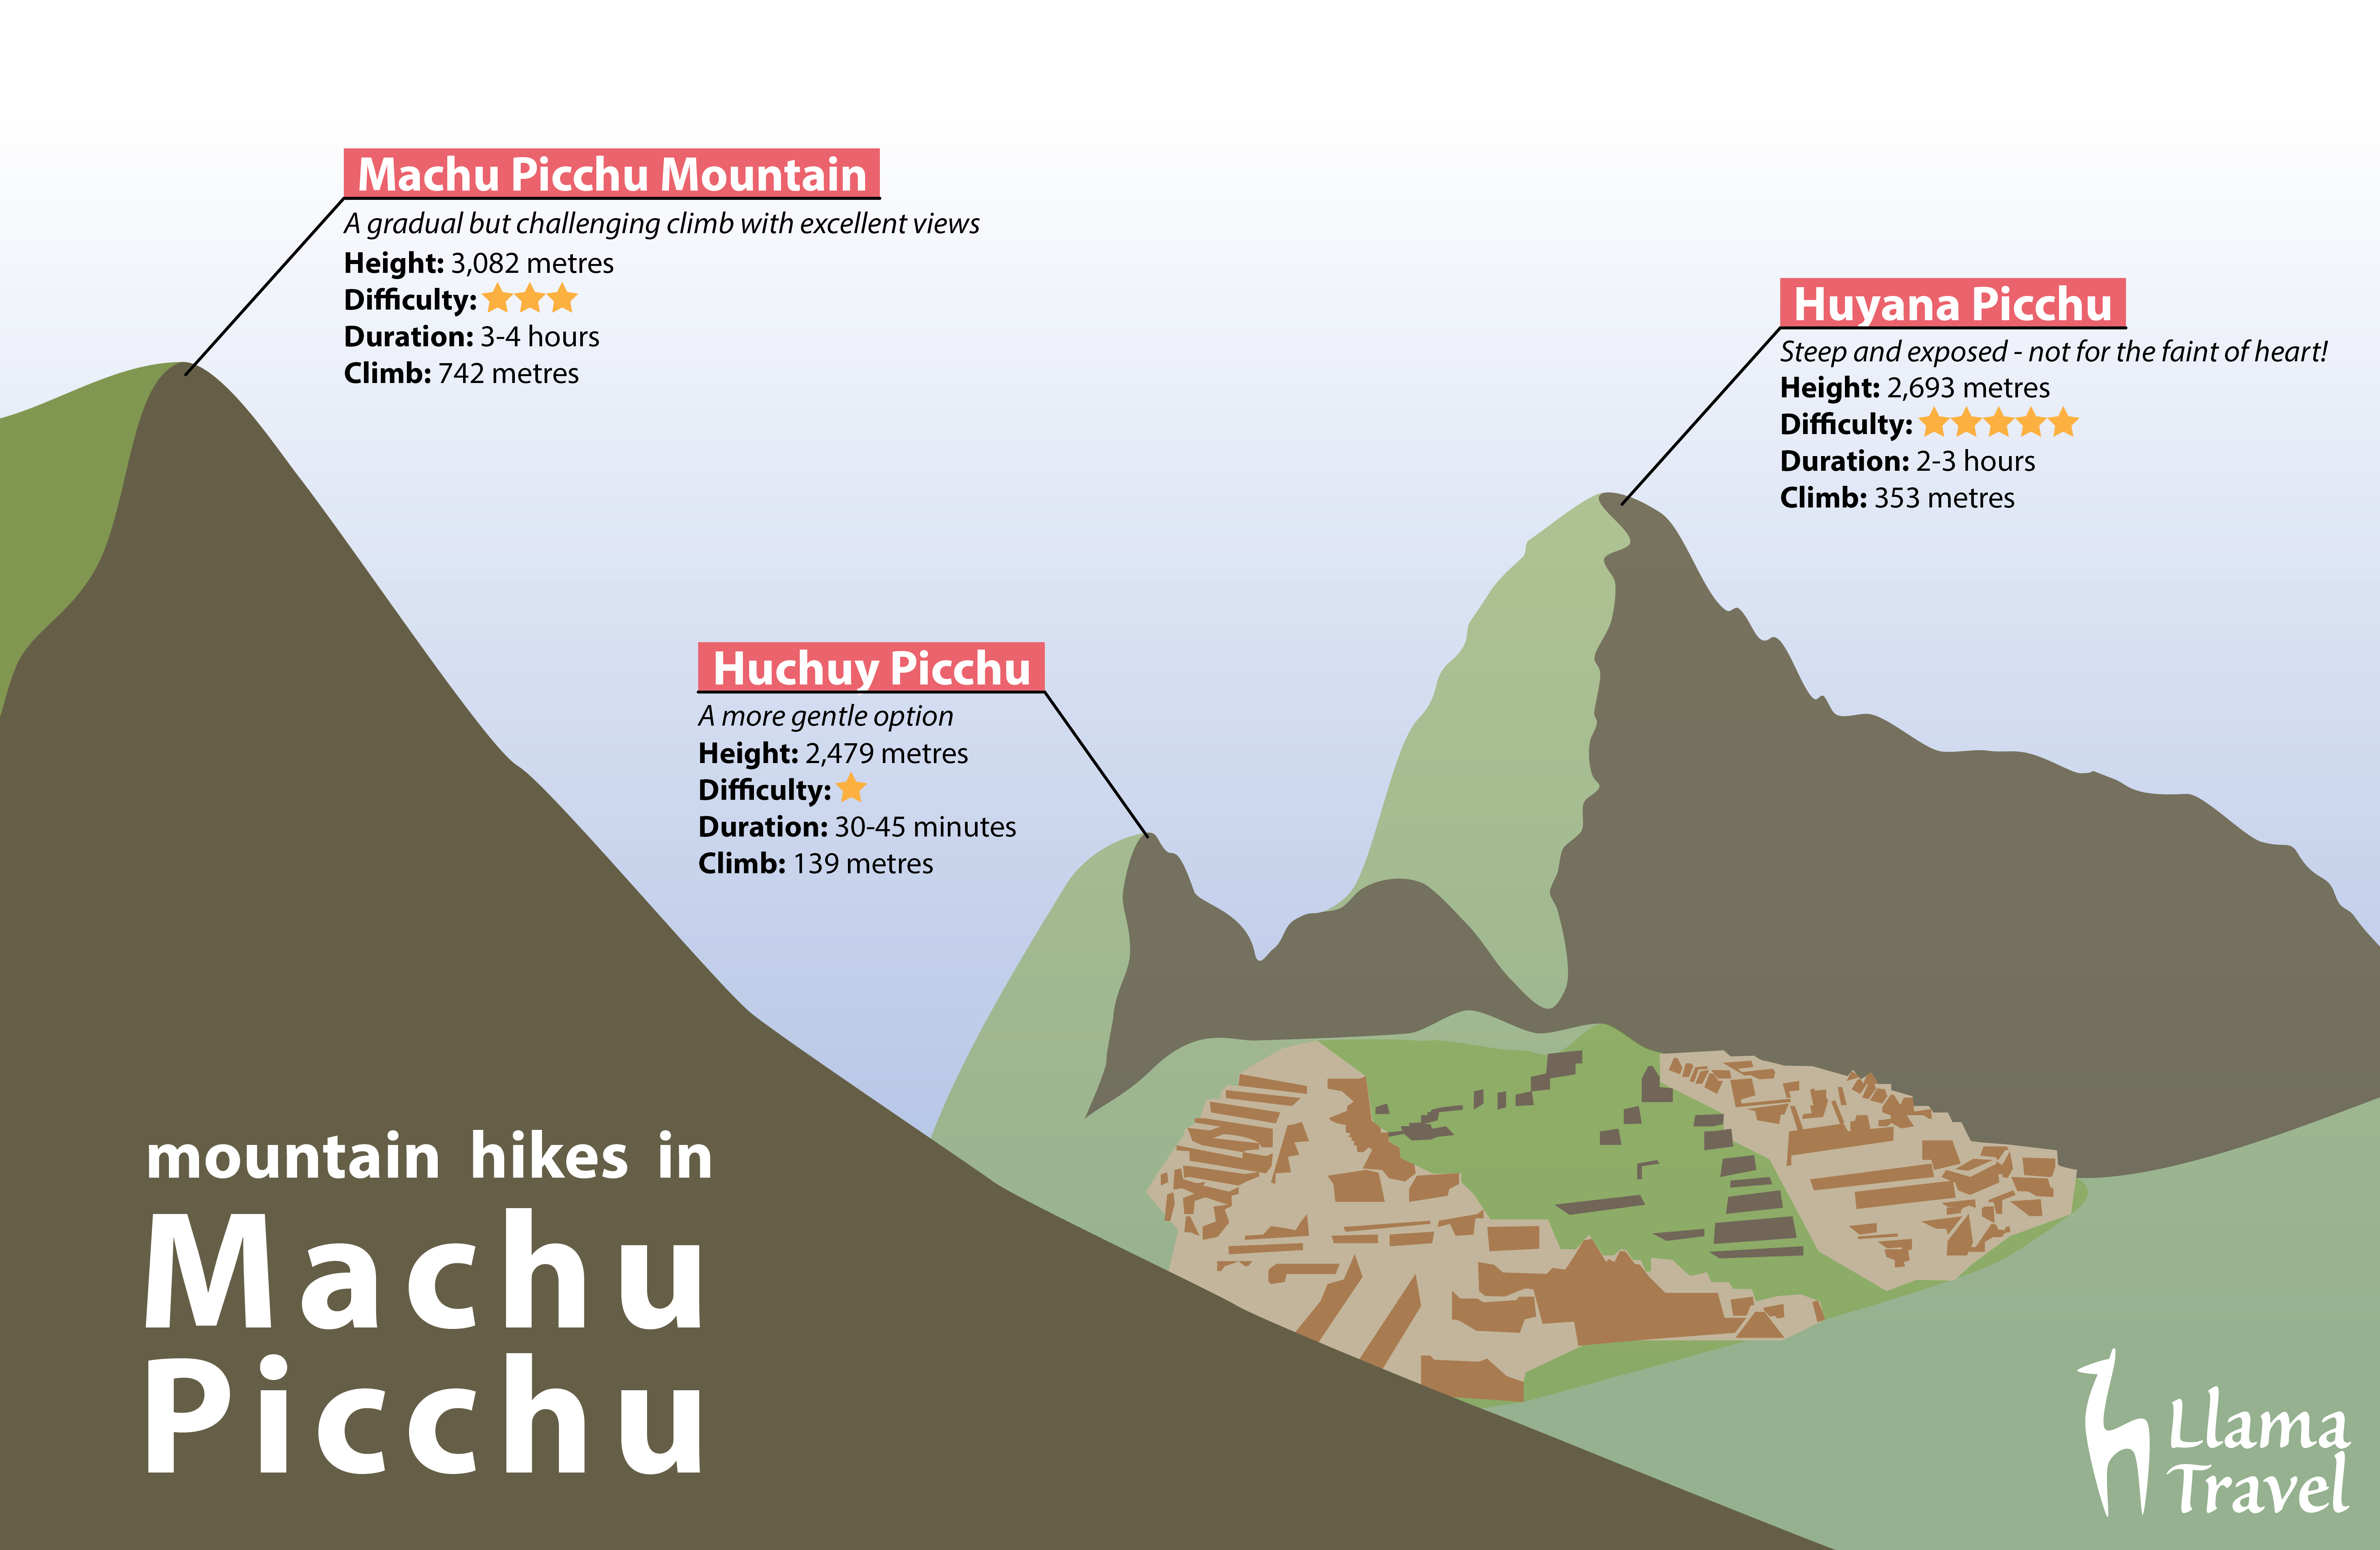 Machu Picchu mountain, Huayna Picchu or Wayna Pikchu, Huchuy Picchu, infographic with height, difficulty and length duration of walk. Should I hike Huayna Picchu or Machu Picchu Mountain?